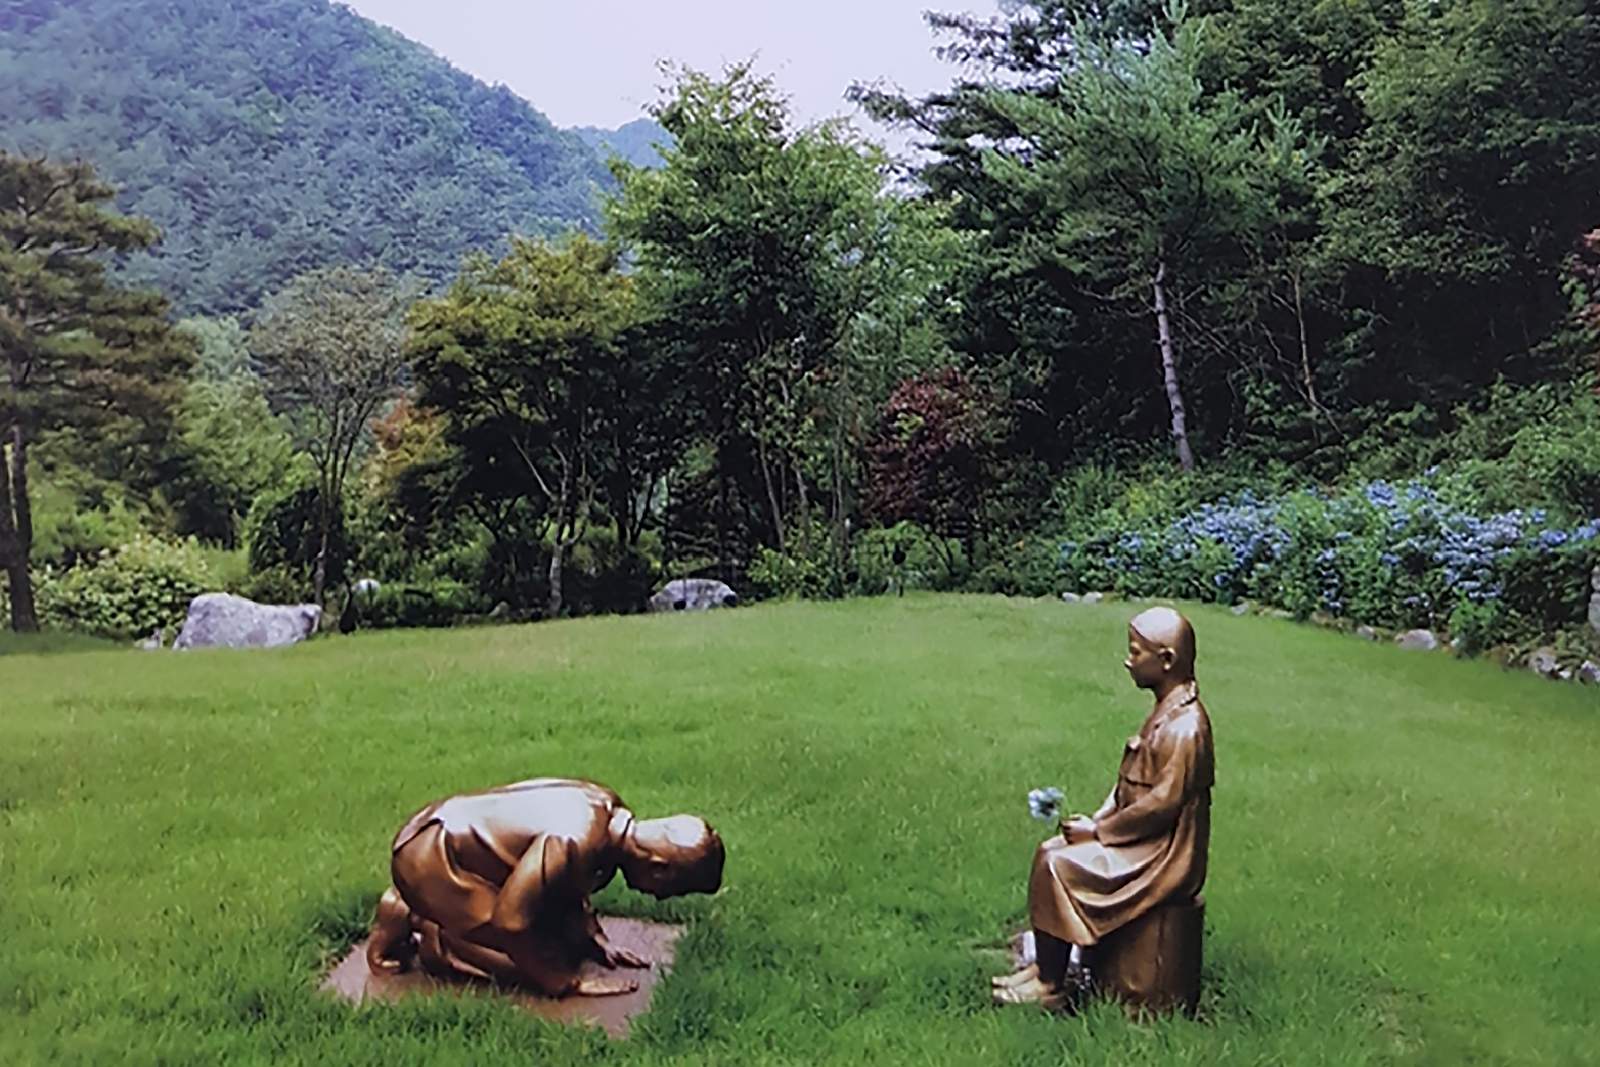 New statues stoke sensitivity between South Korea, Japan